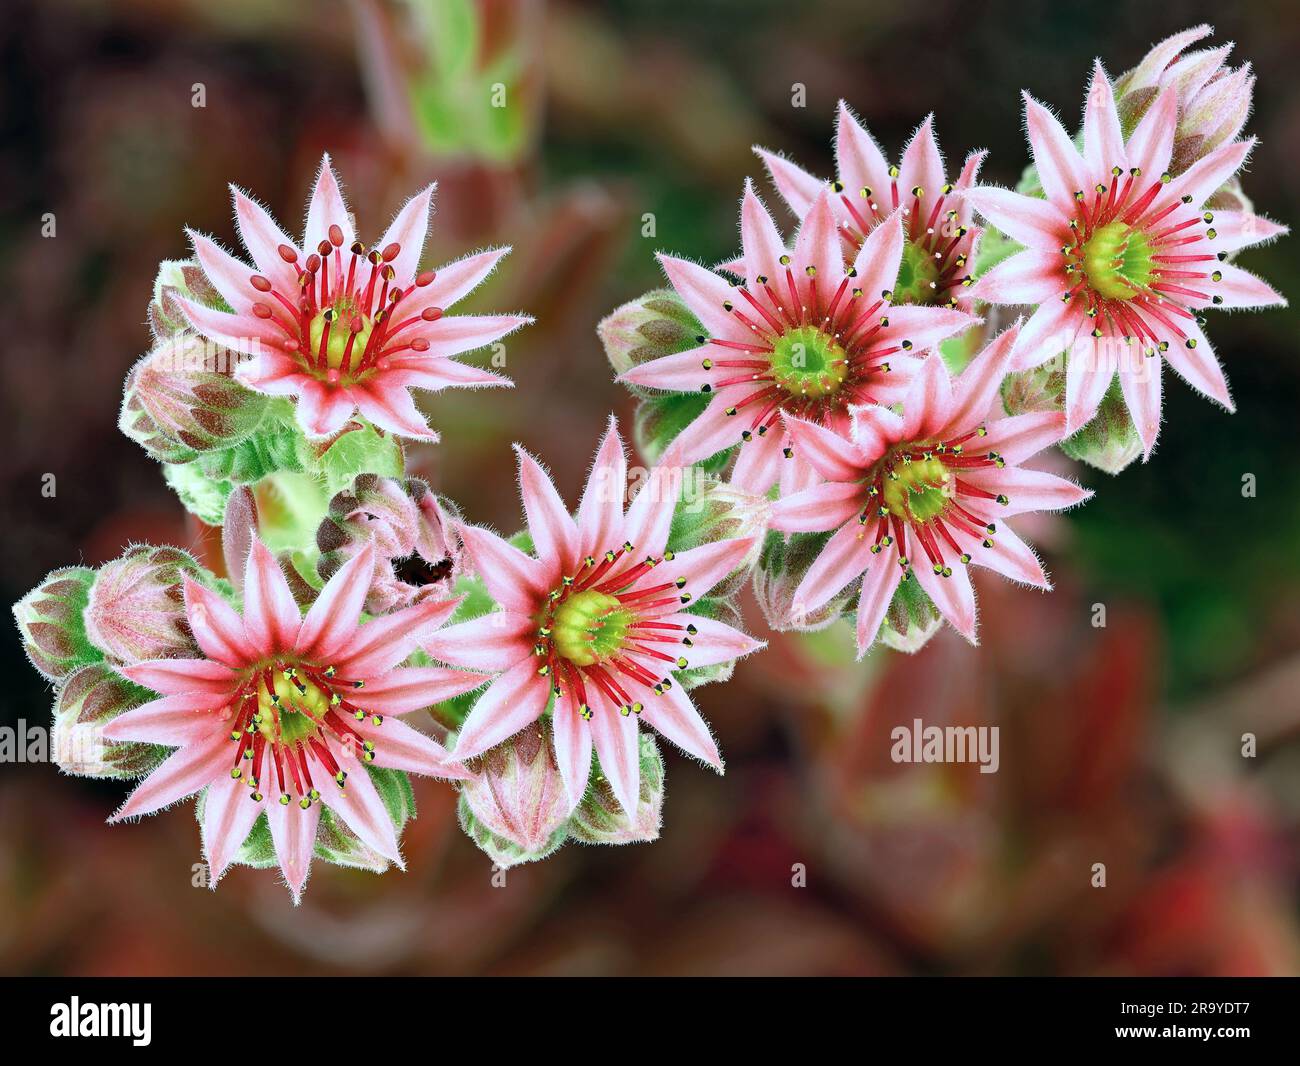 pink flowers of sempervivum, high detail macro shot of blooming houseleek plant Stock Photo